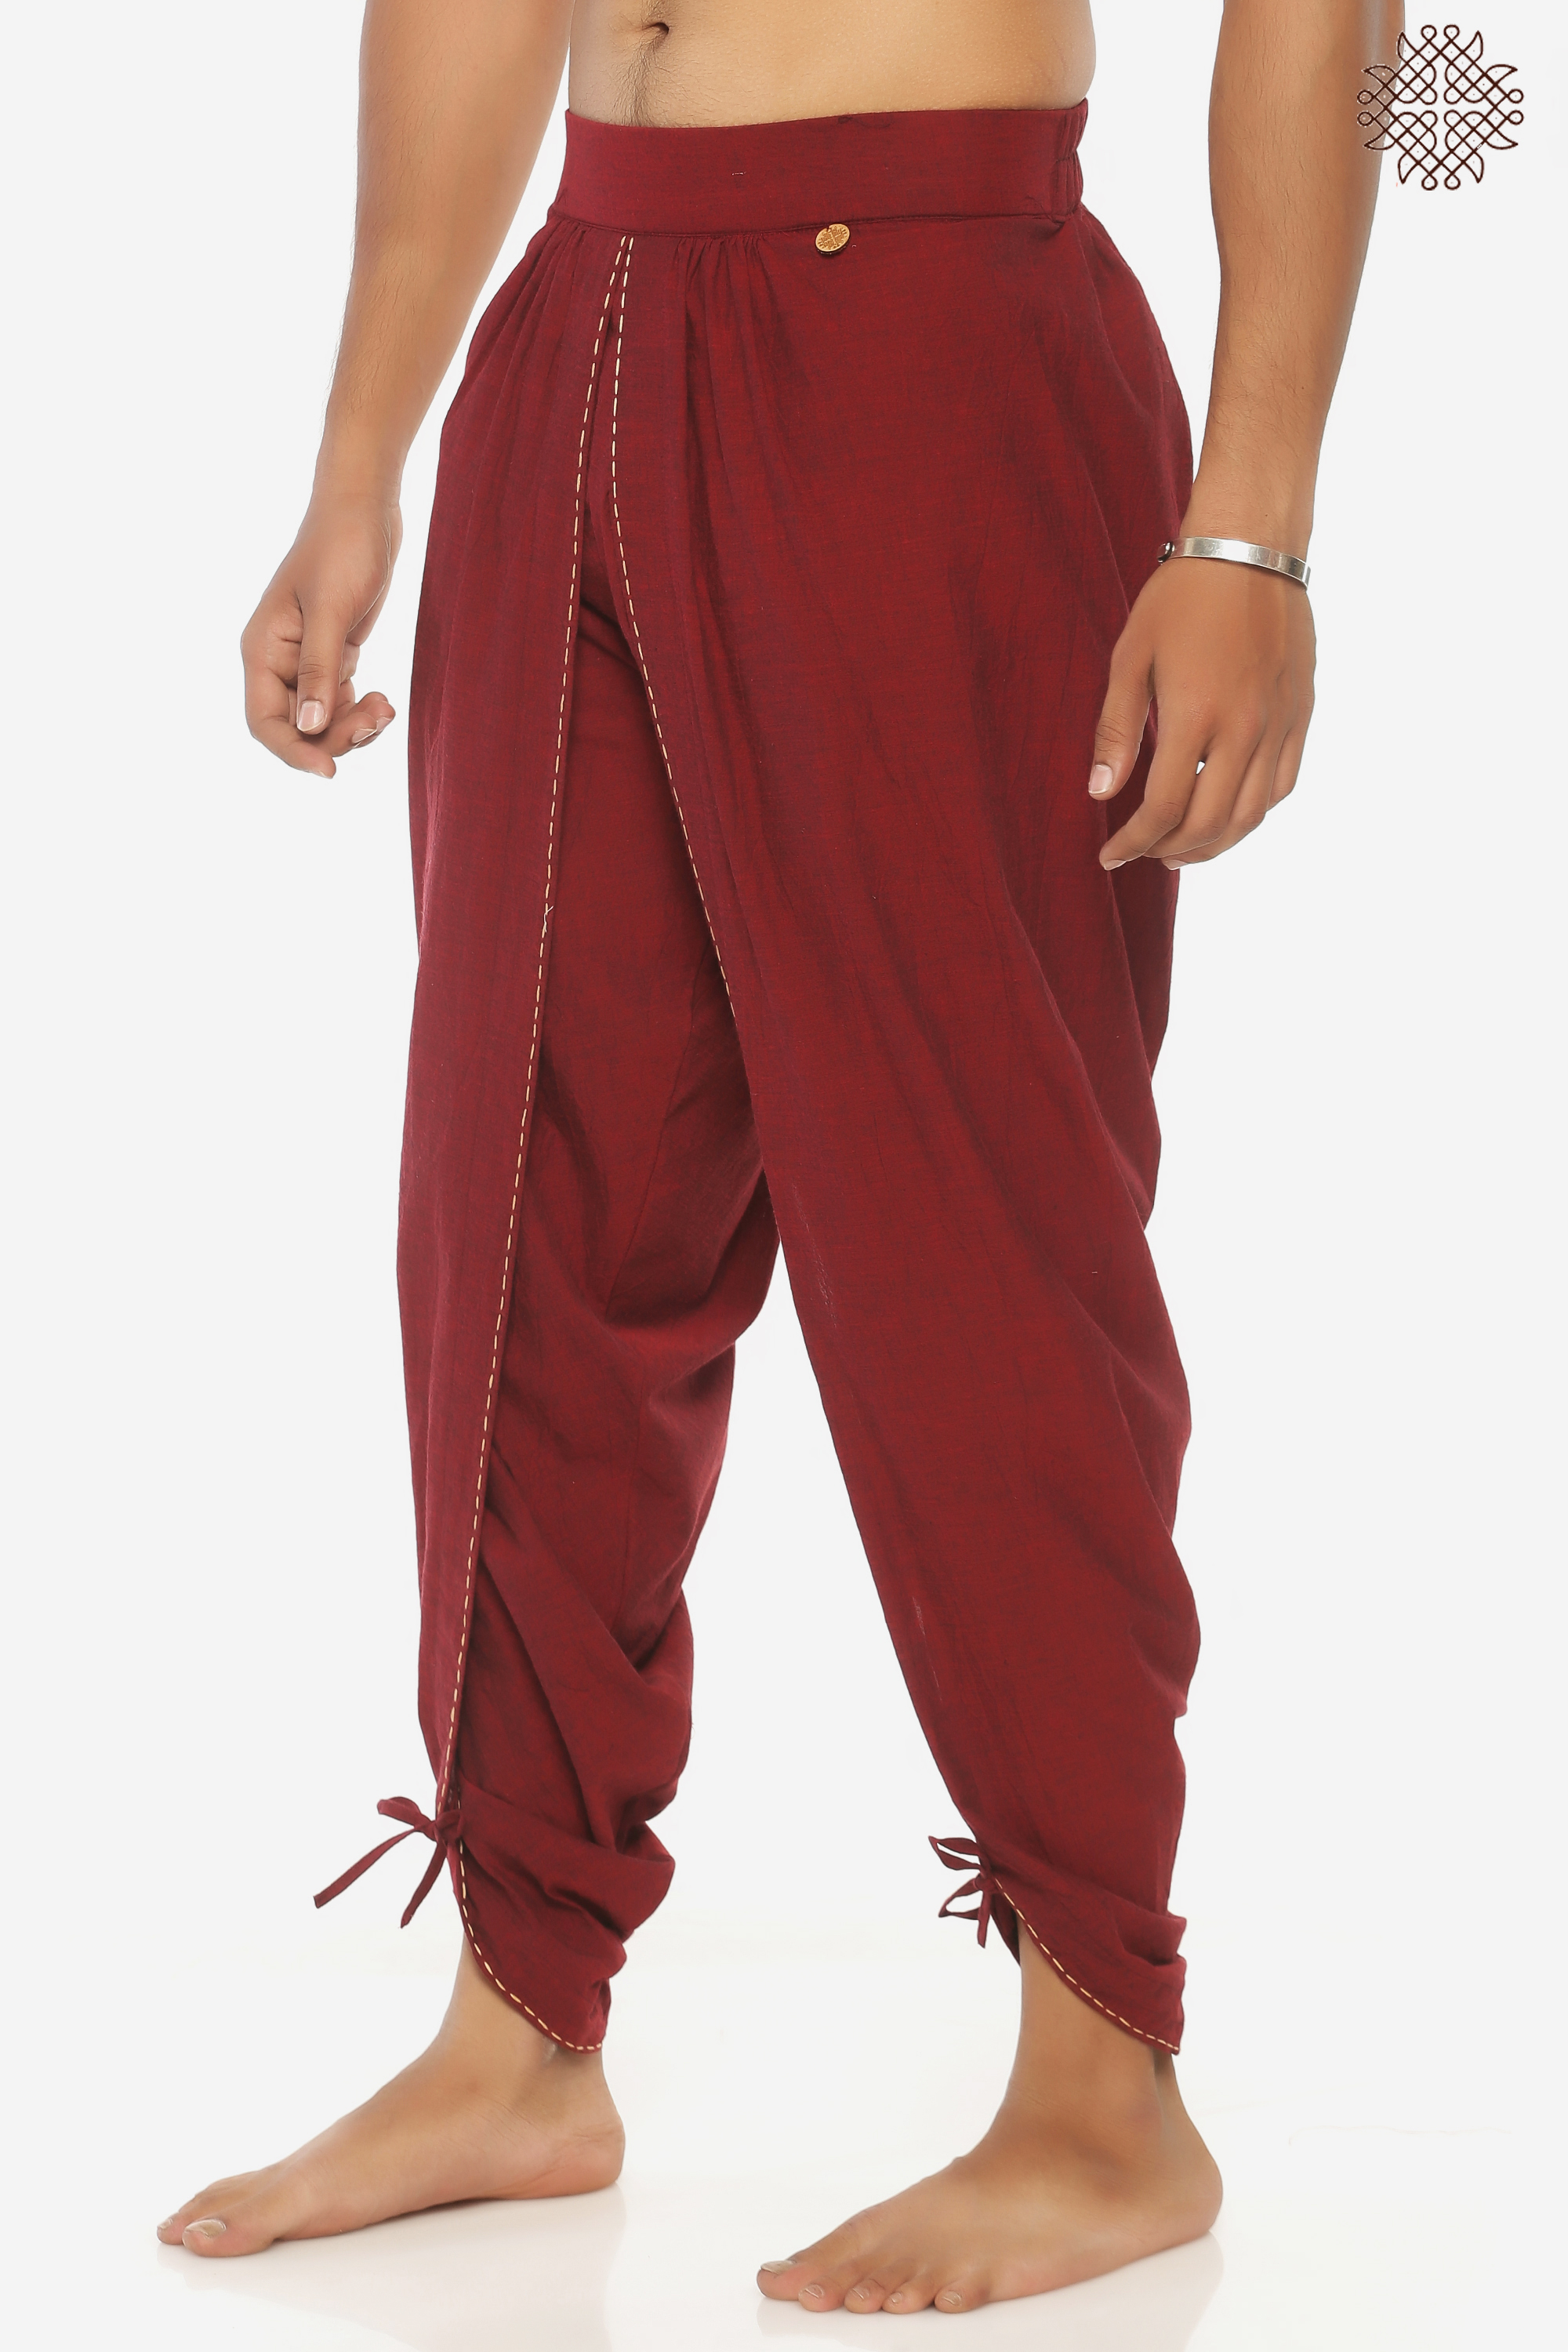 Gota Lace Embellished Red Dhoti Pants | EST-RPSAL-082 | Cilory.com